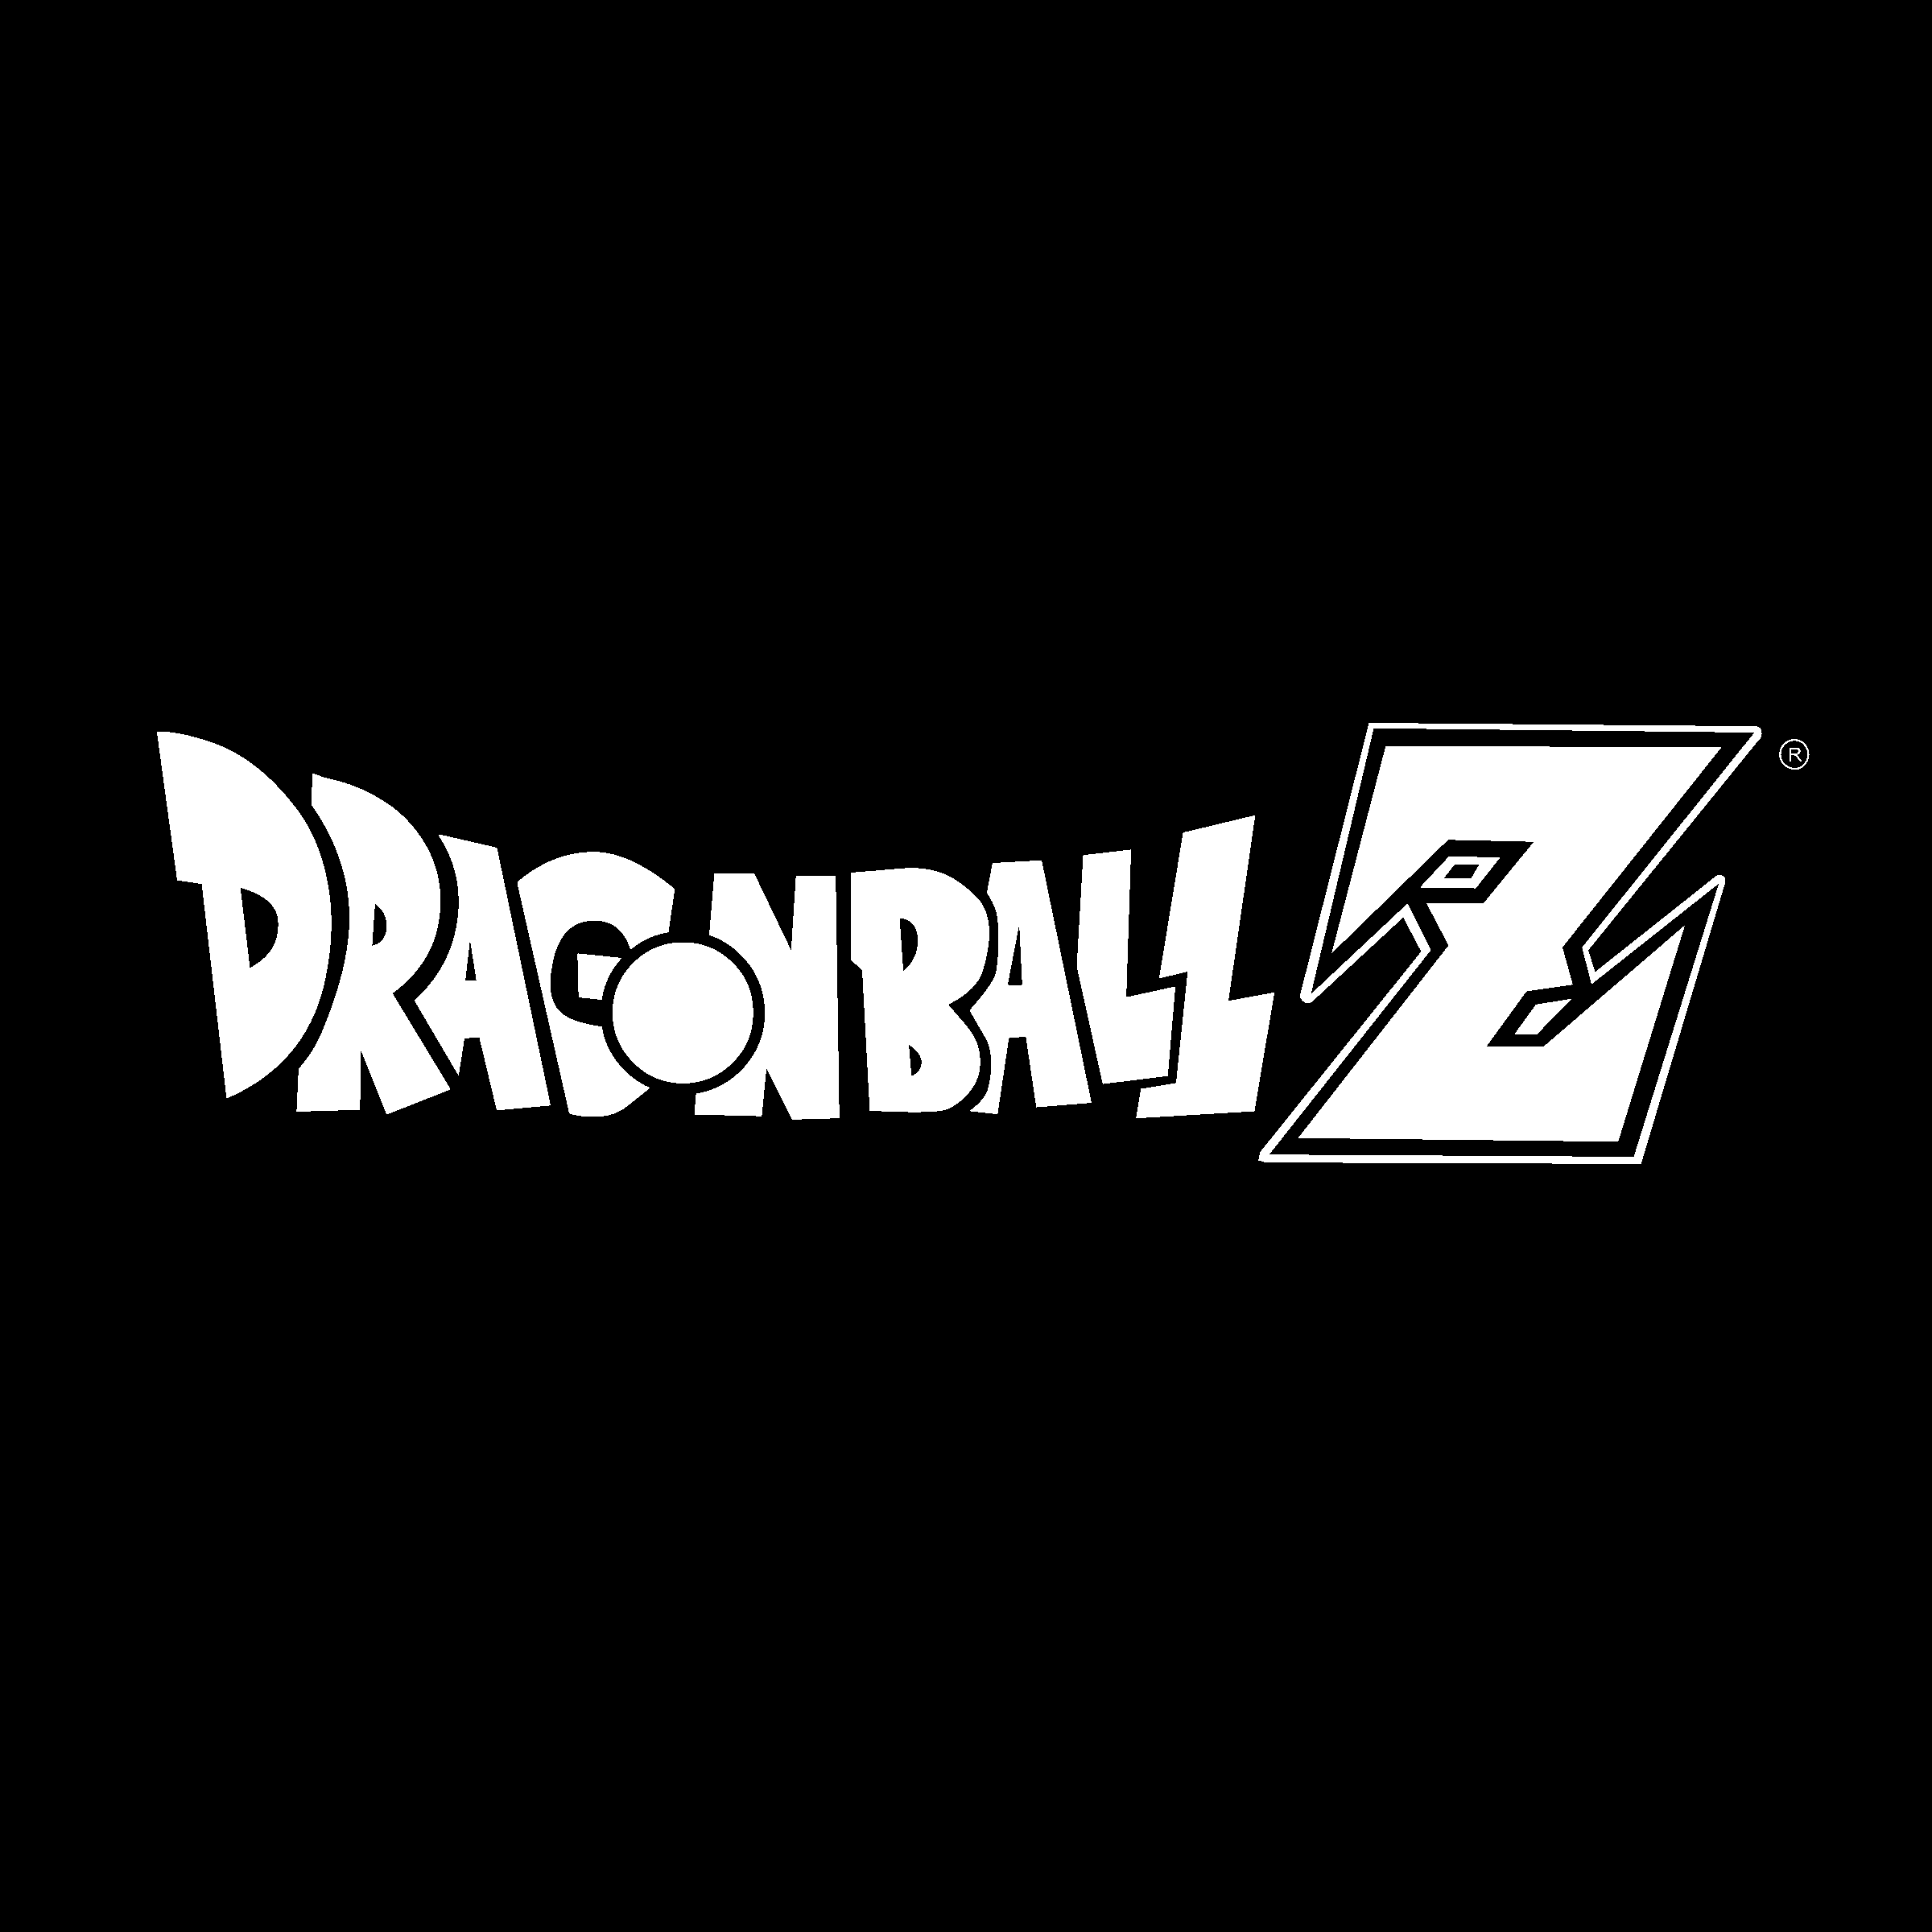 Black Z Logo - Dragon Ball Z Logo PNG Transparent & SVG Vector - Freebie Supply